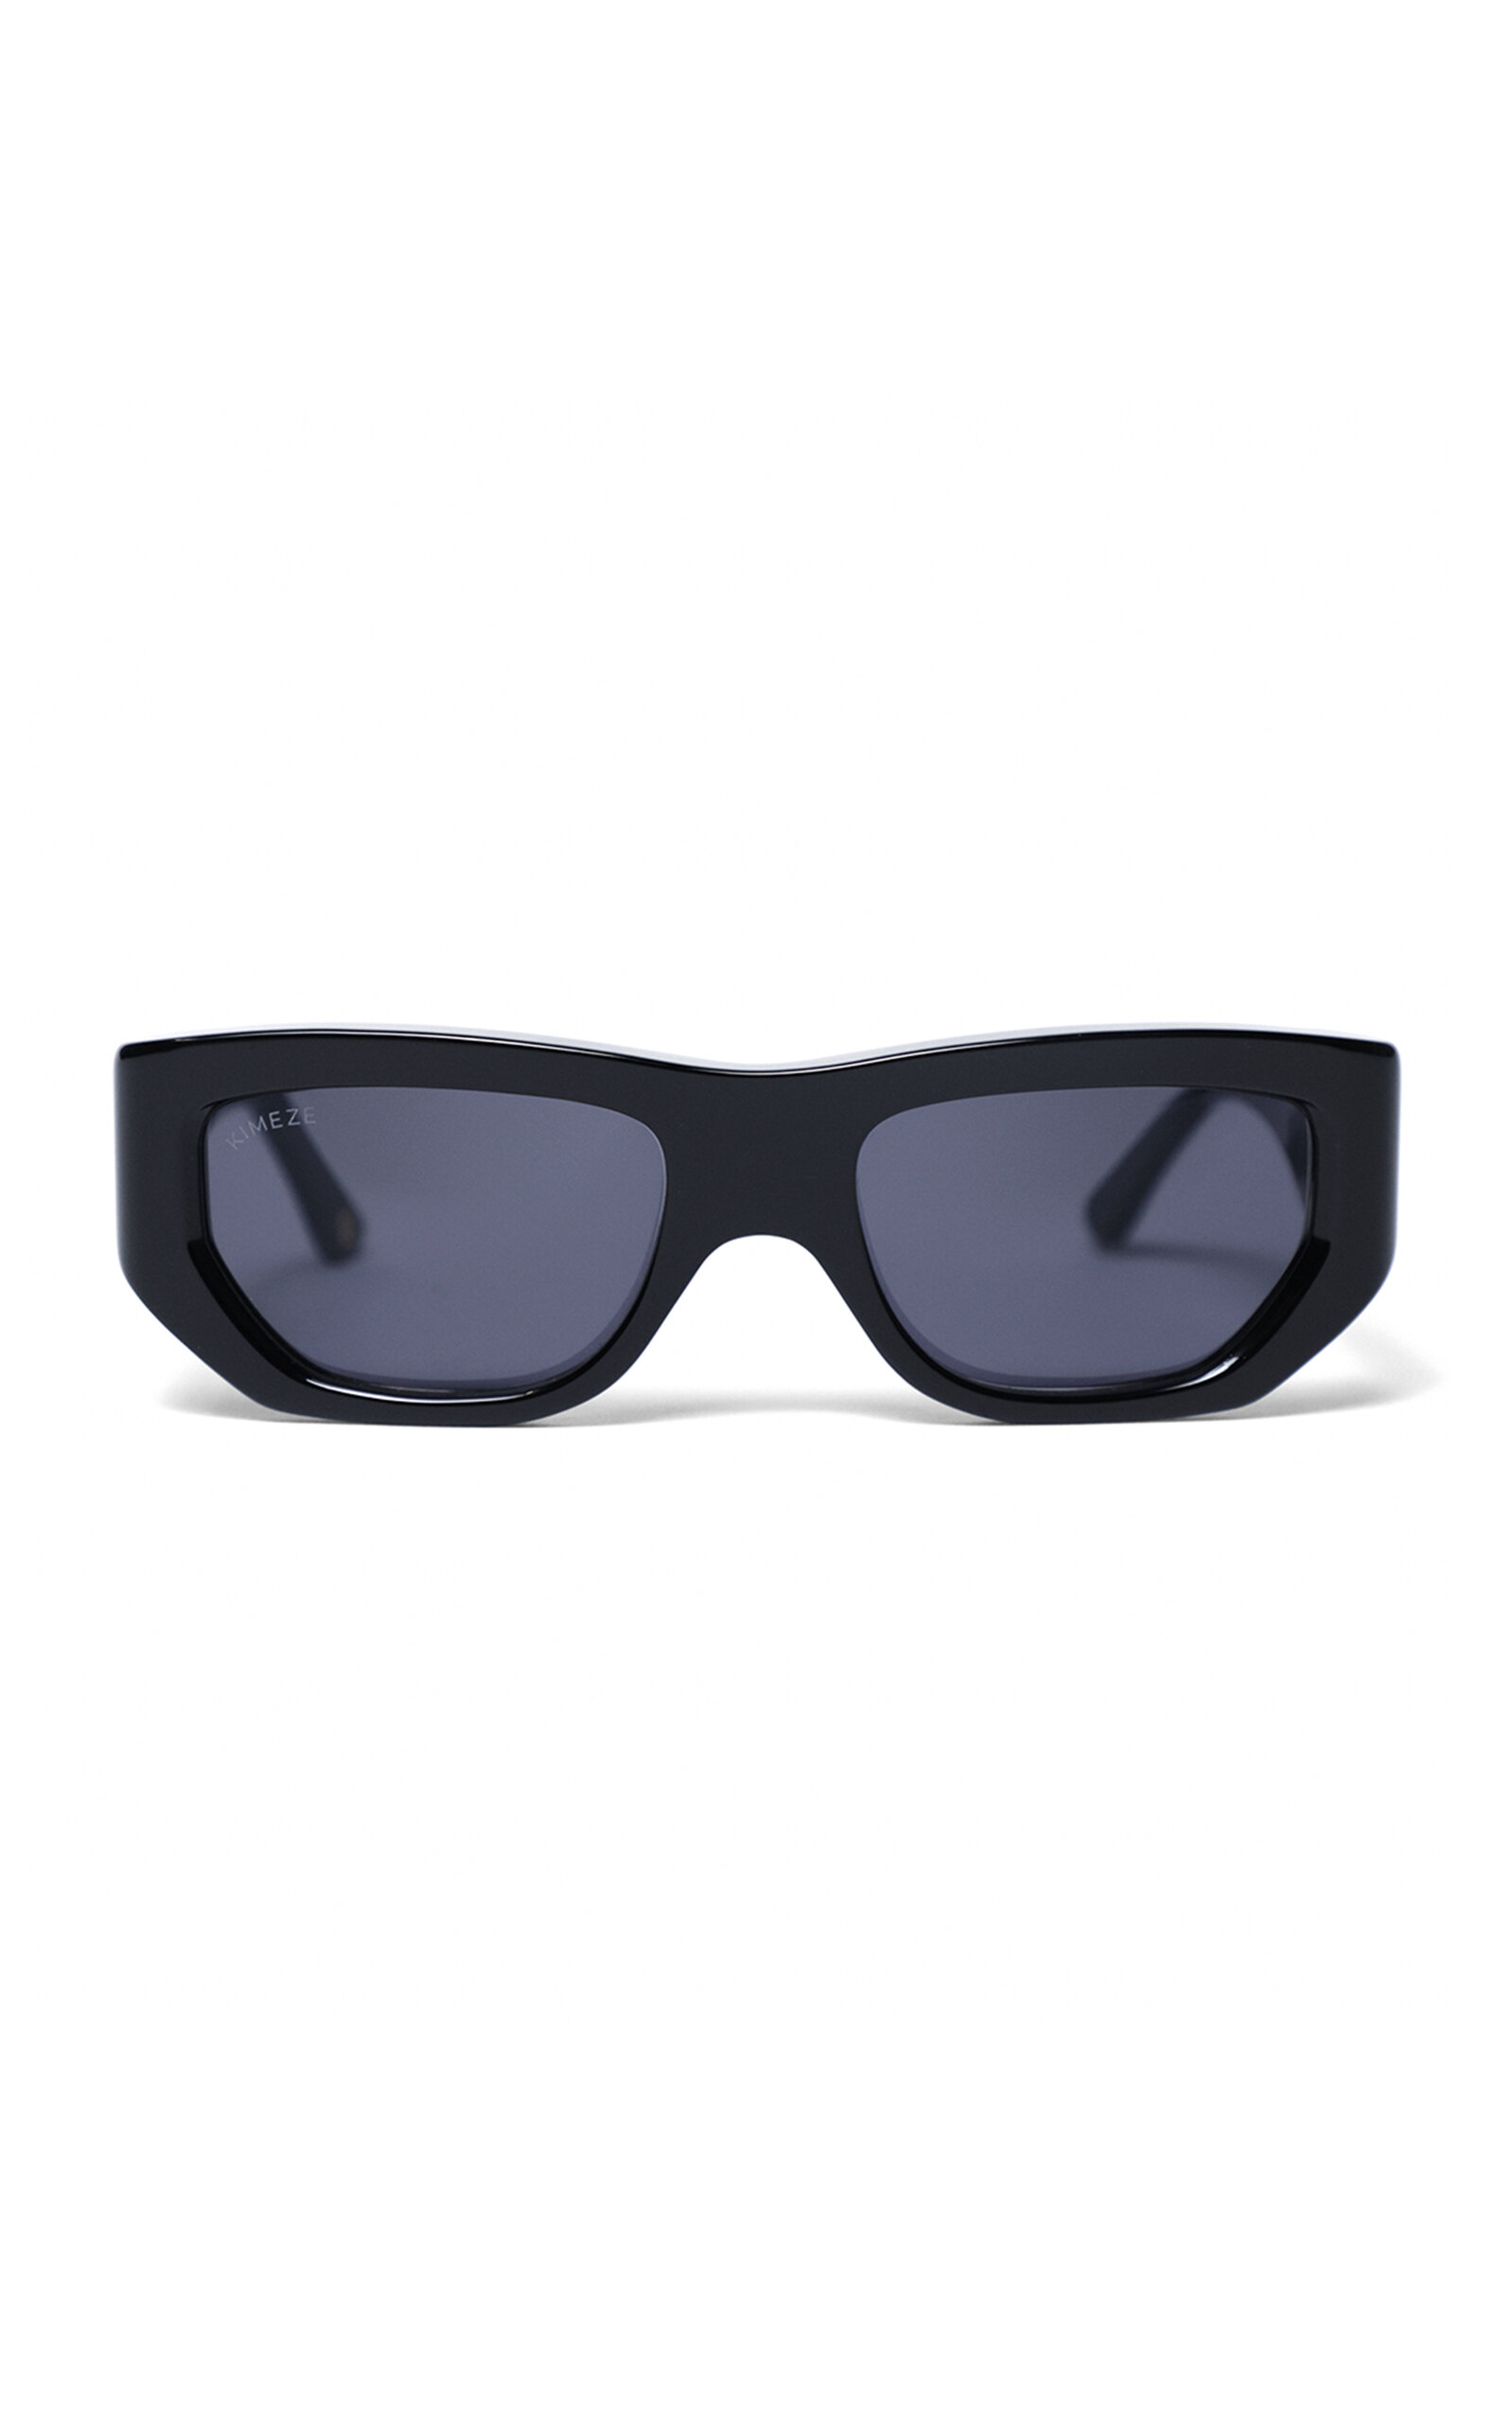 Kimeze Concept 1 D-frame Acetate Sunglasses In Black